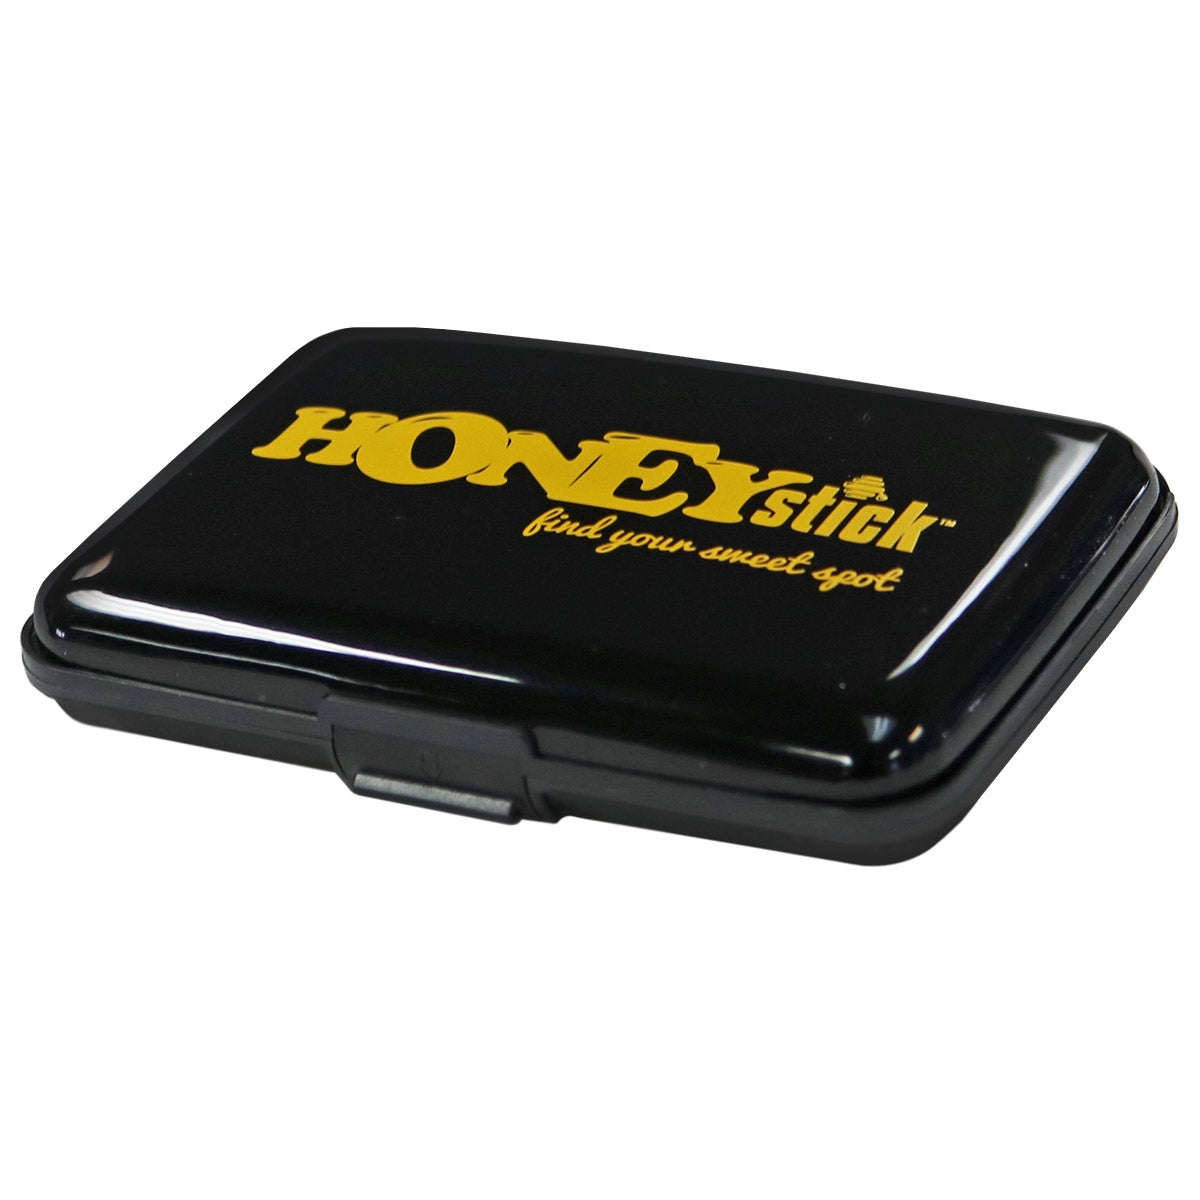 HoneyStick DUO Cartridge Vape - Autodraw Dual 510 Cart Battery